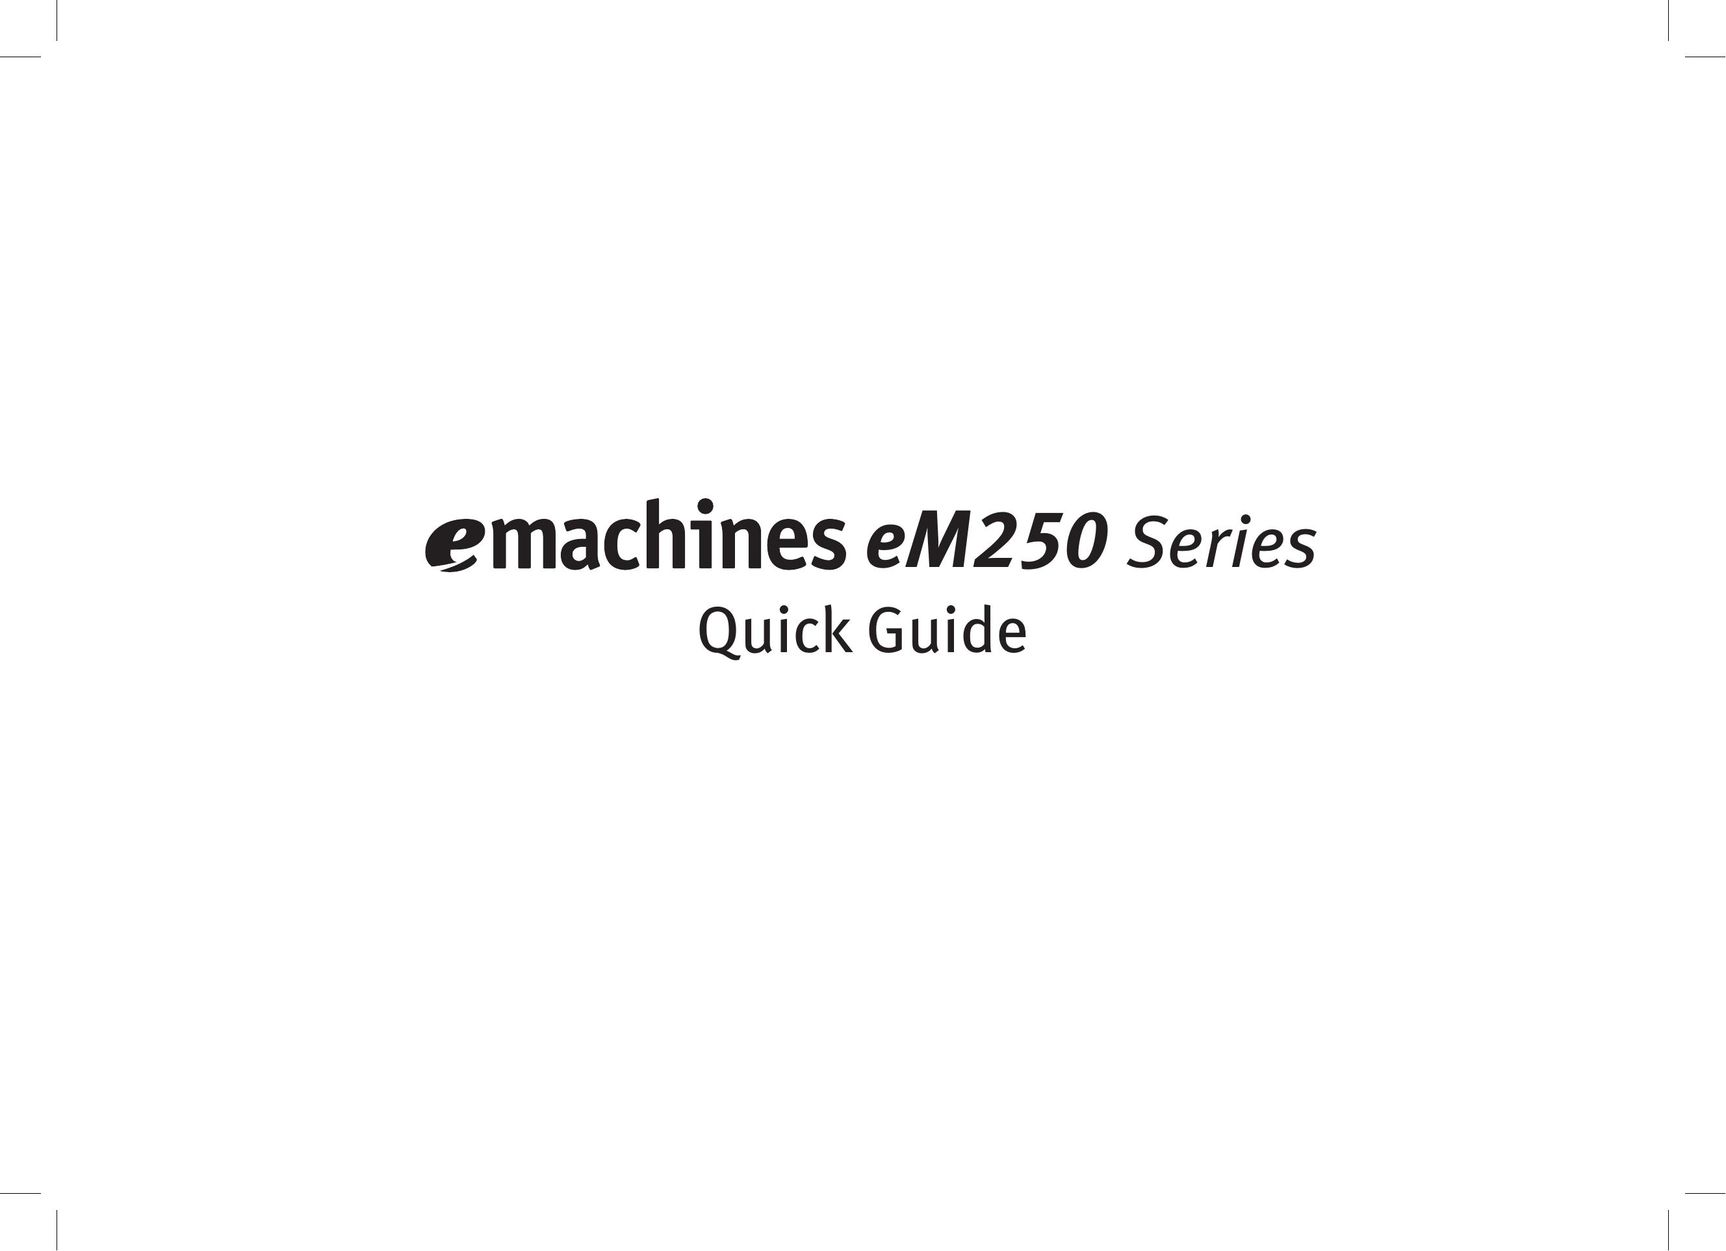 eMachines eM250 series Laptop User Manual